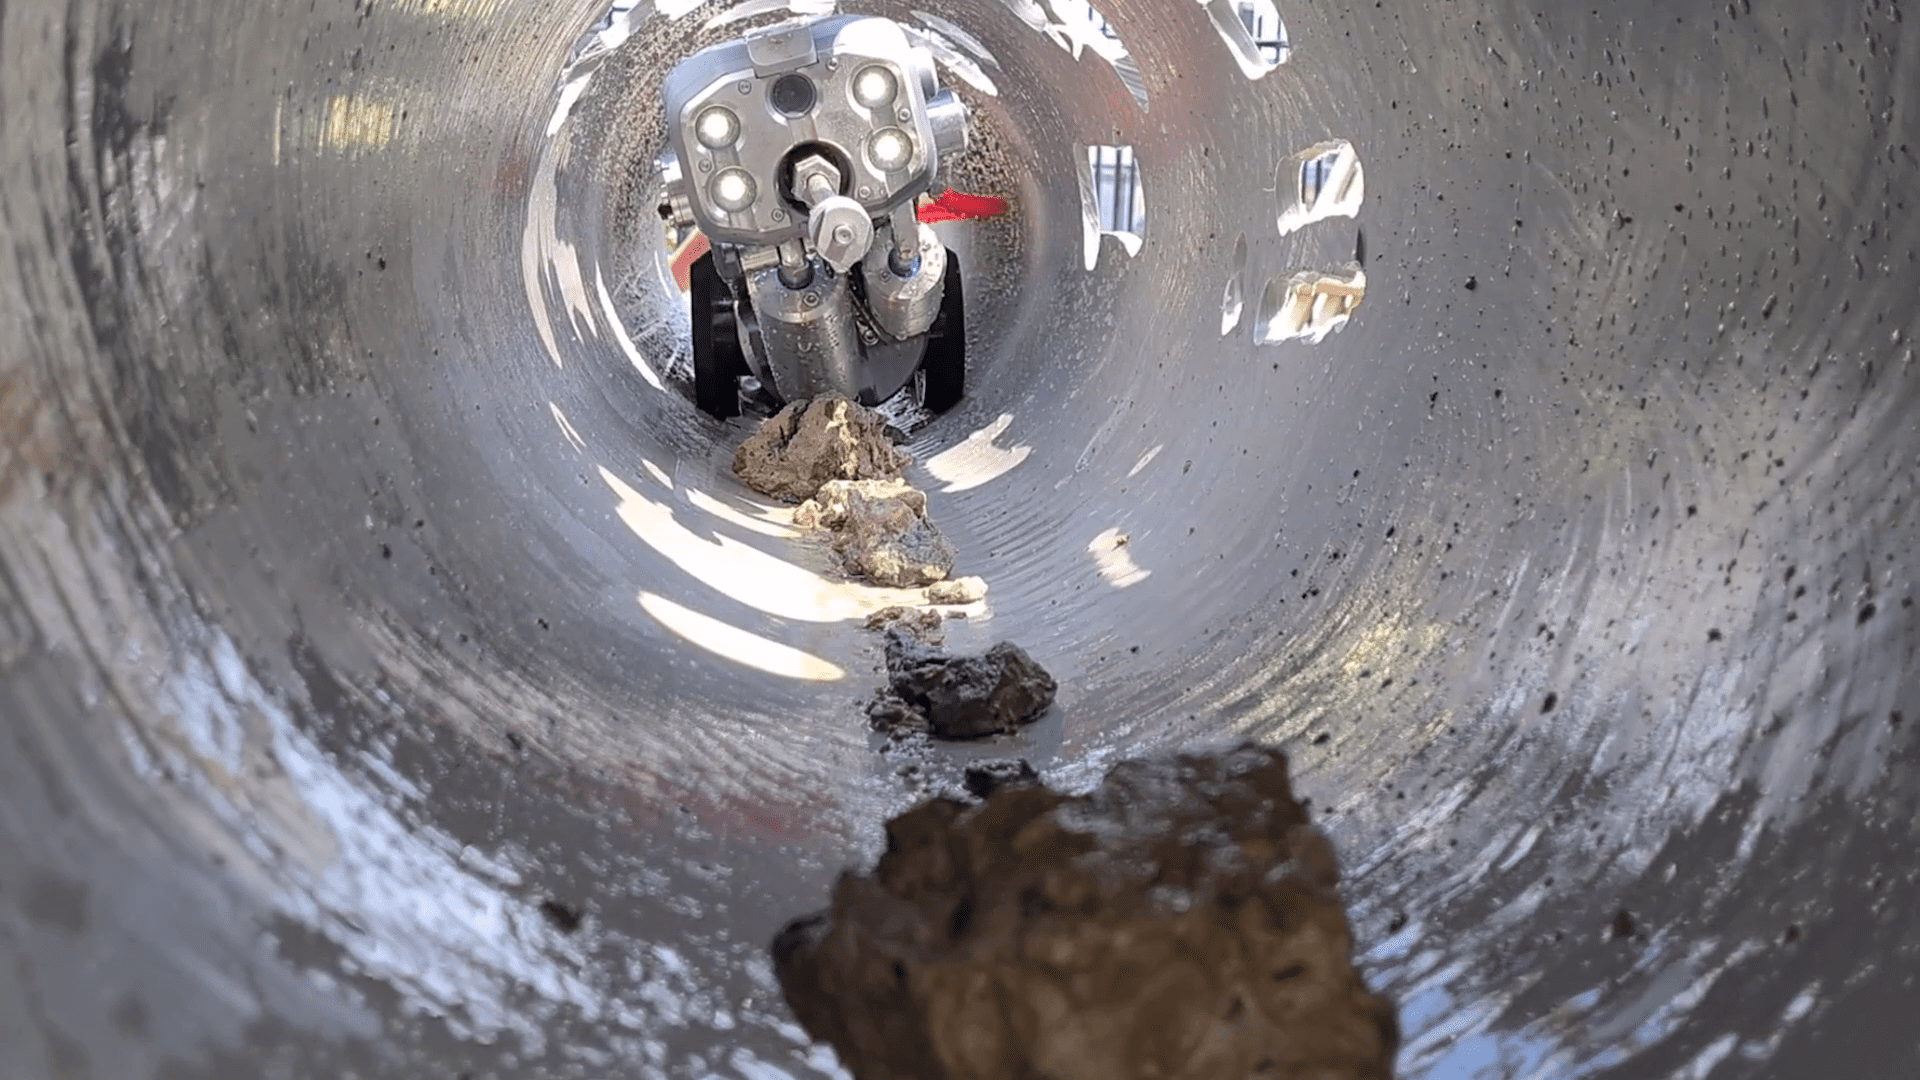 Sewer Robotics pressure testing concrete sample